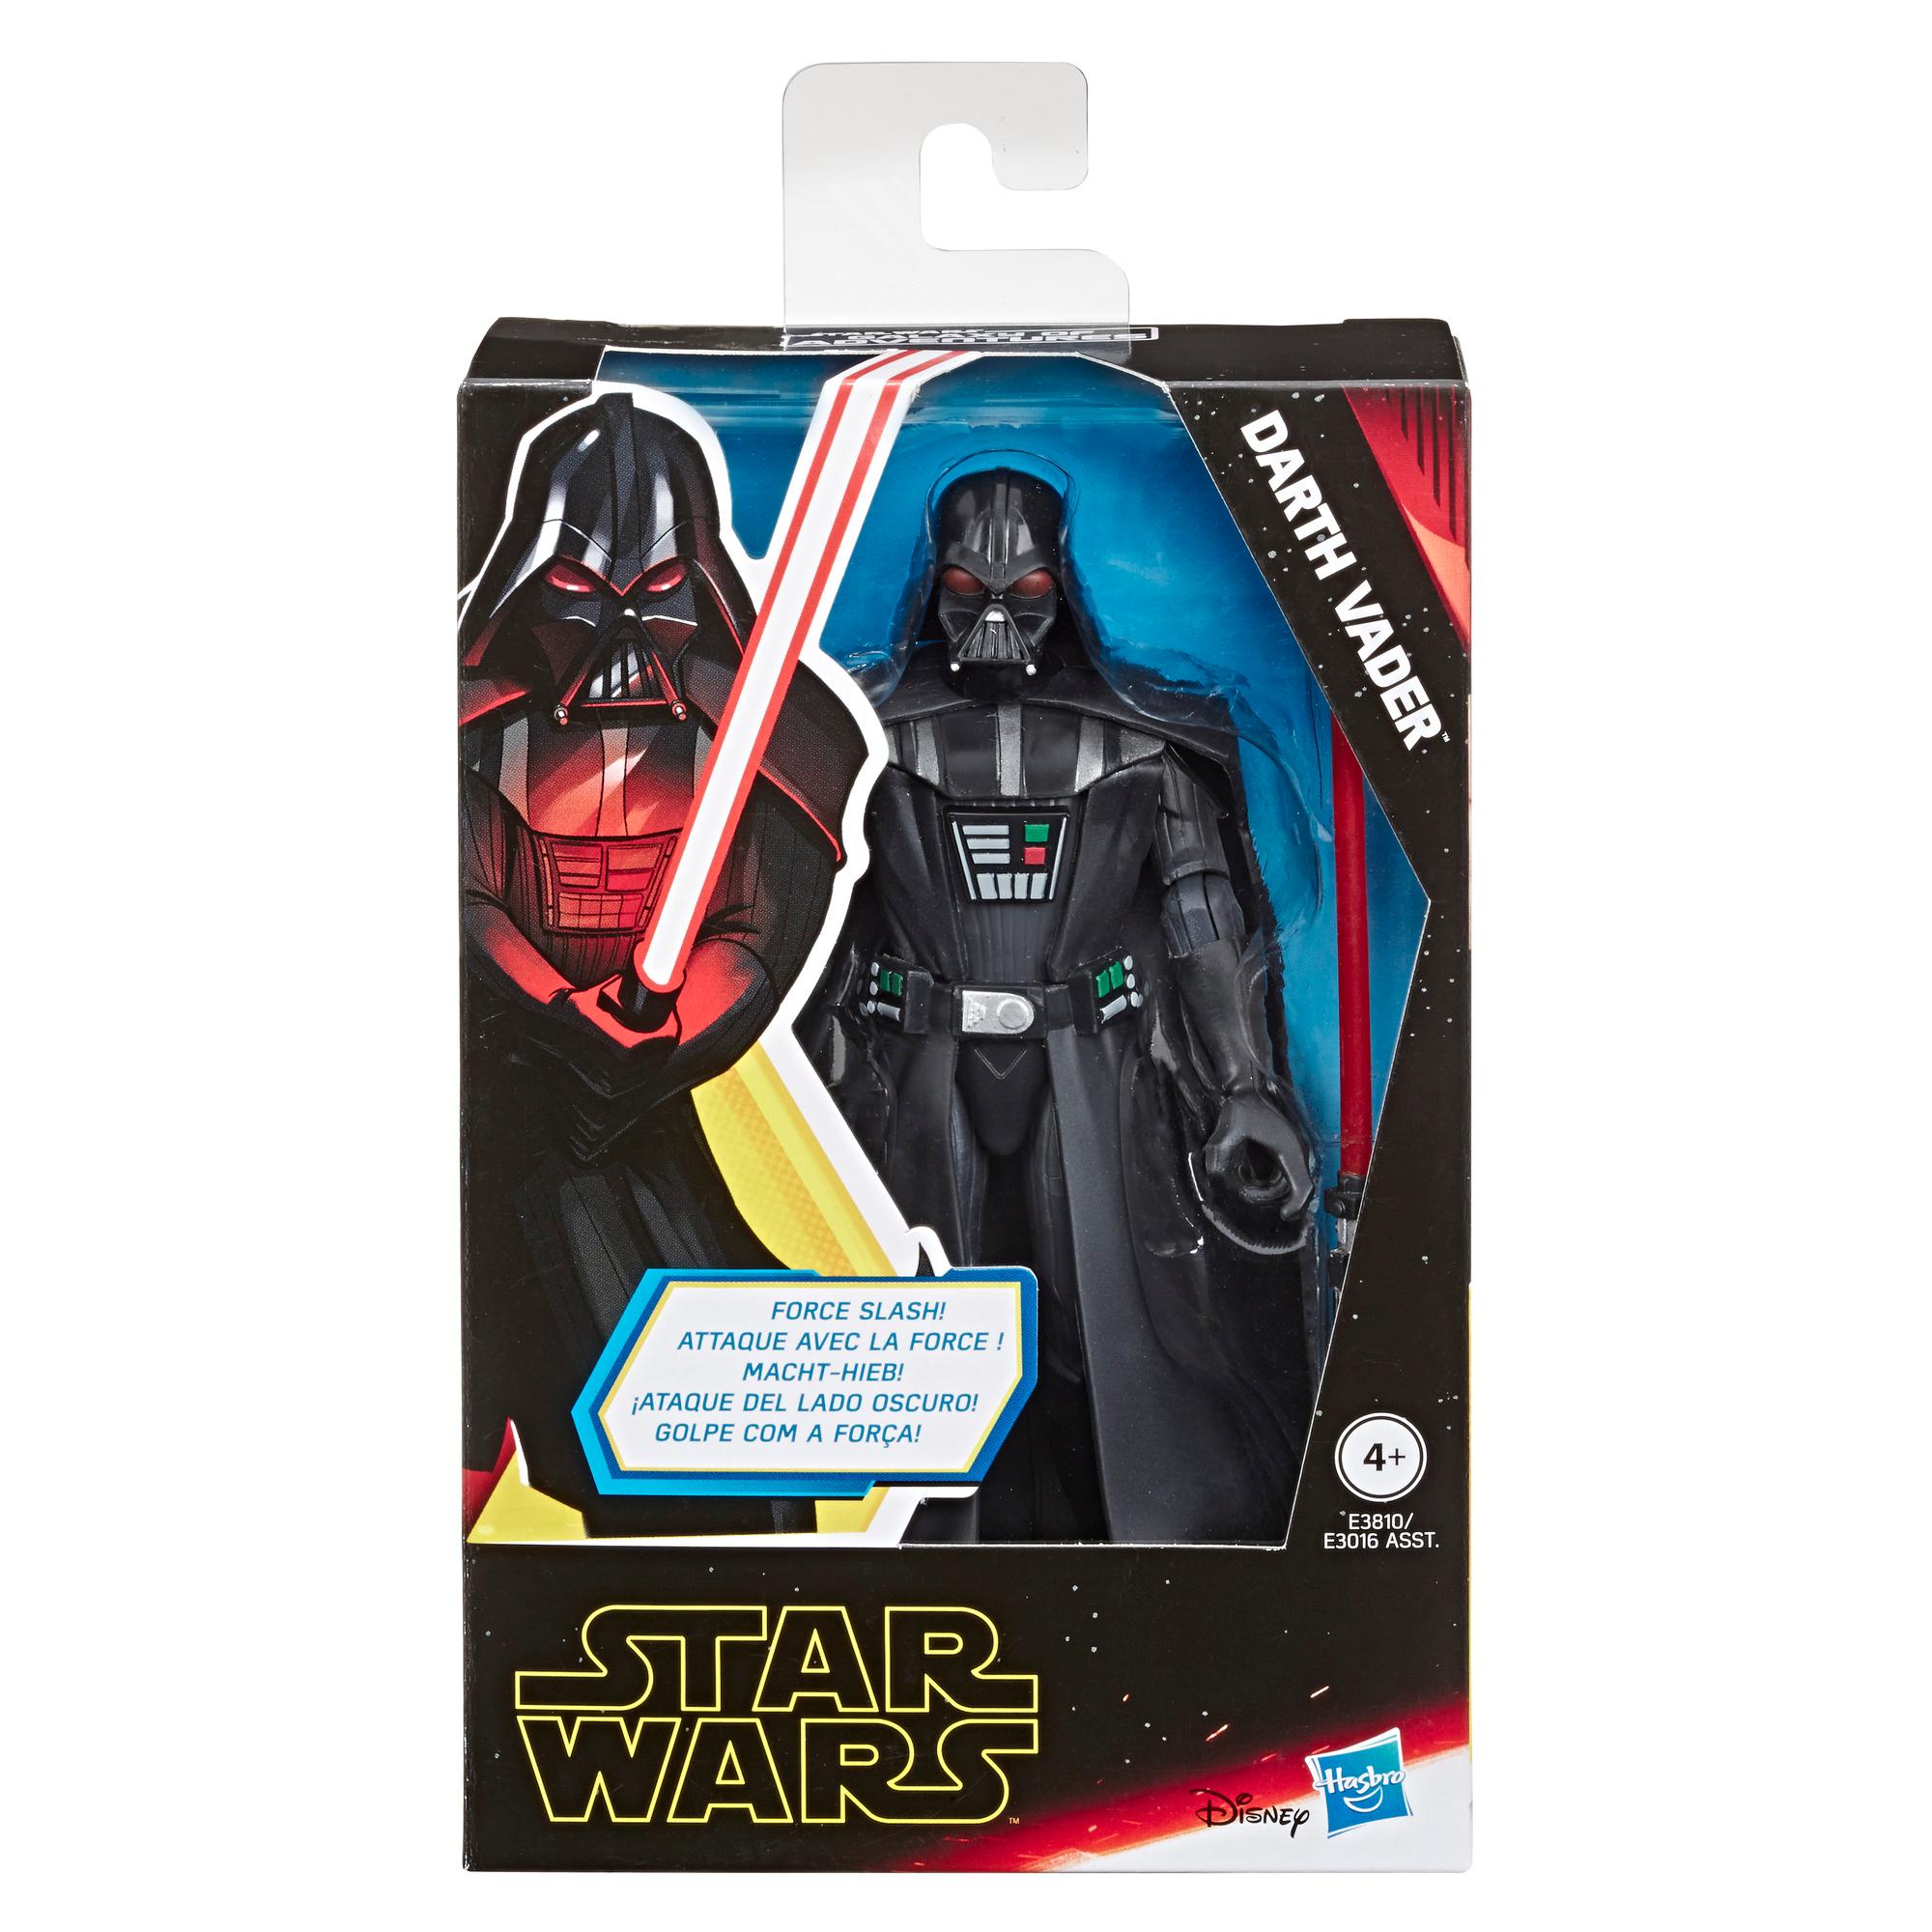 Hasbro Star Wars Galaxy of Adventures Darth Vader Action Figure for sale online